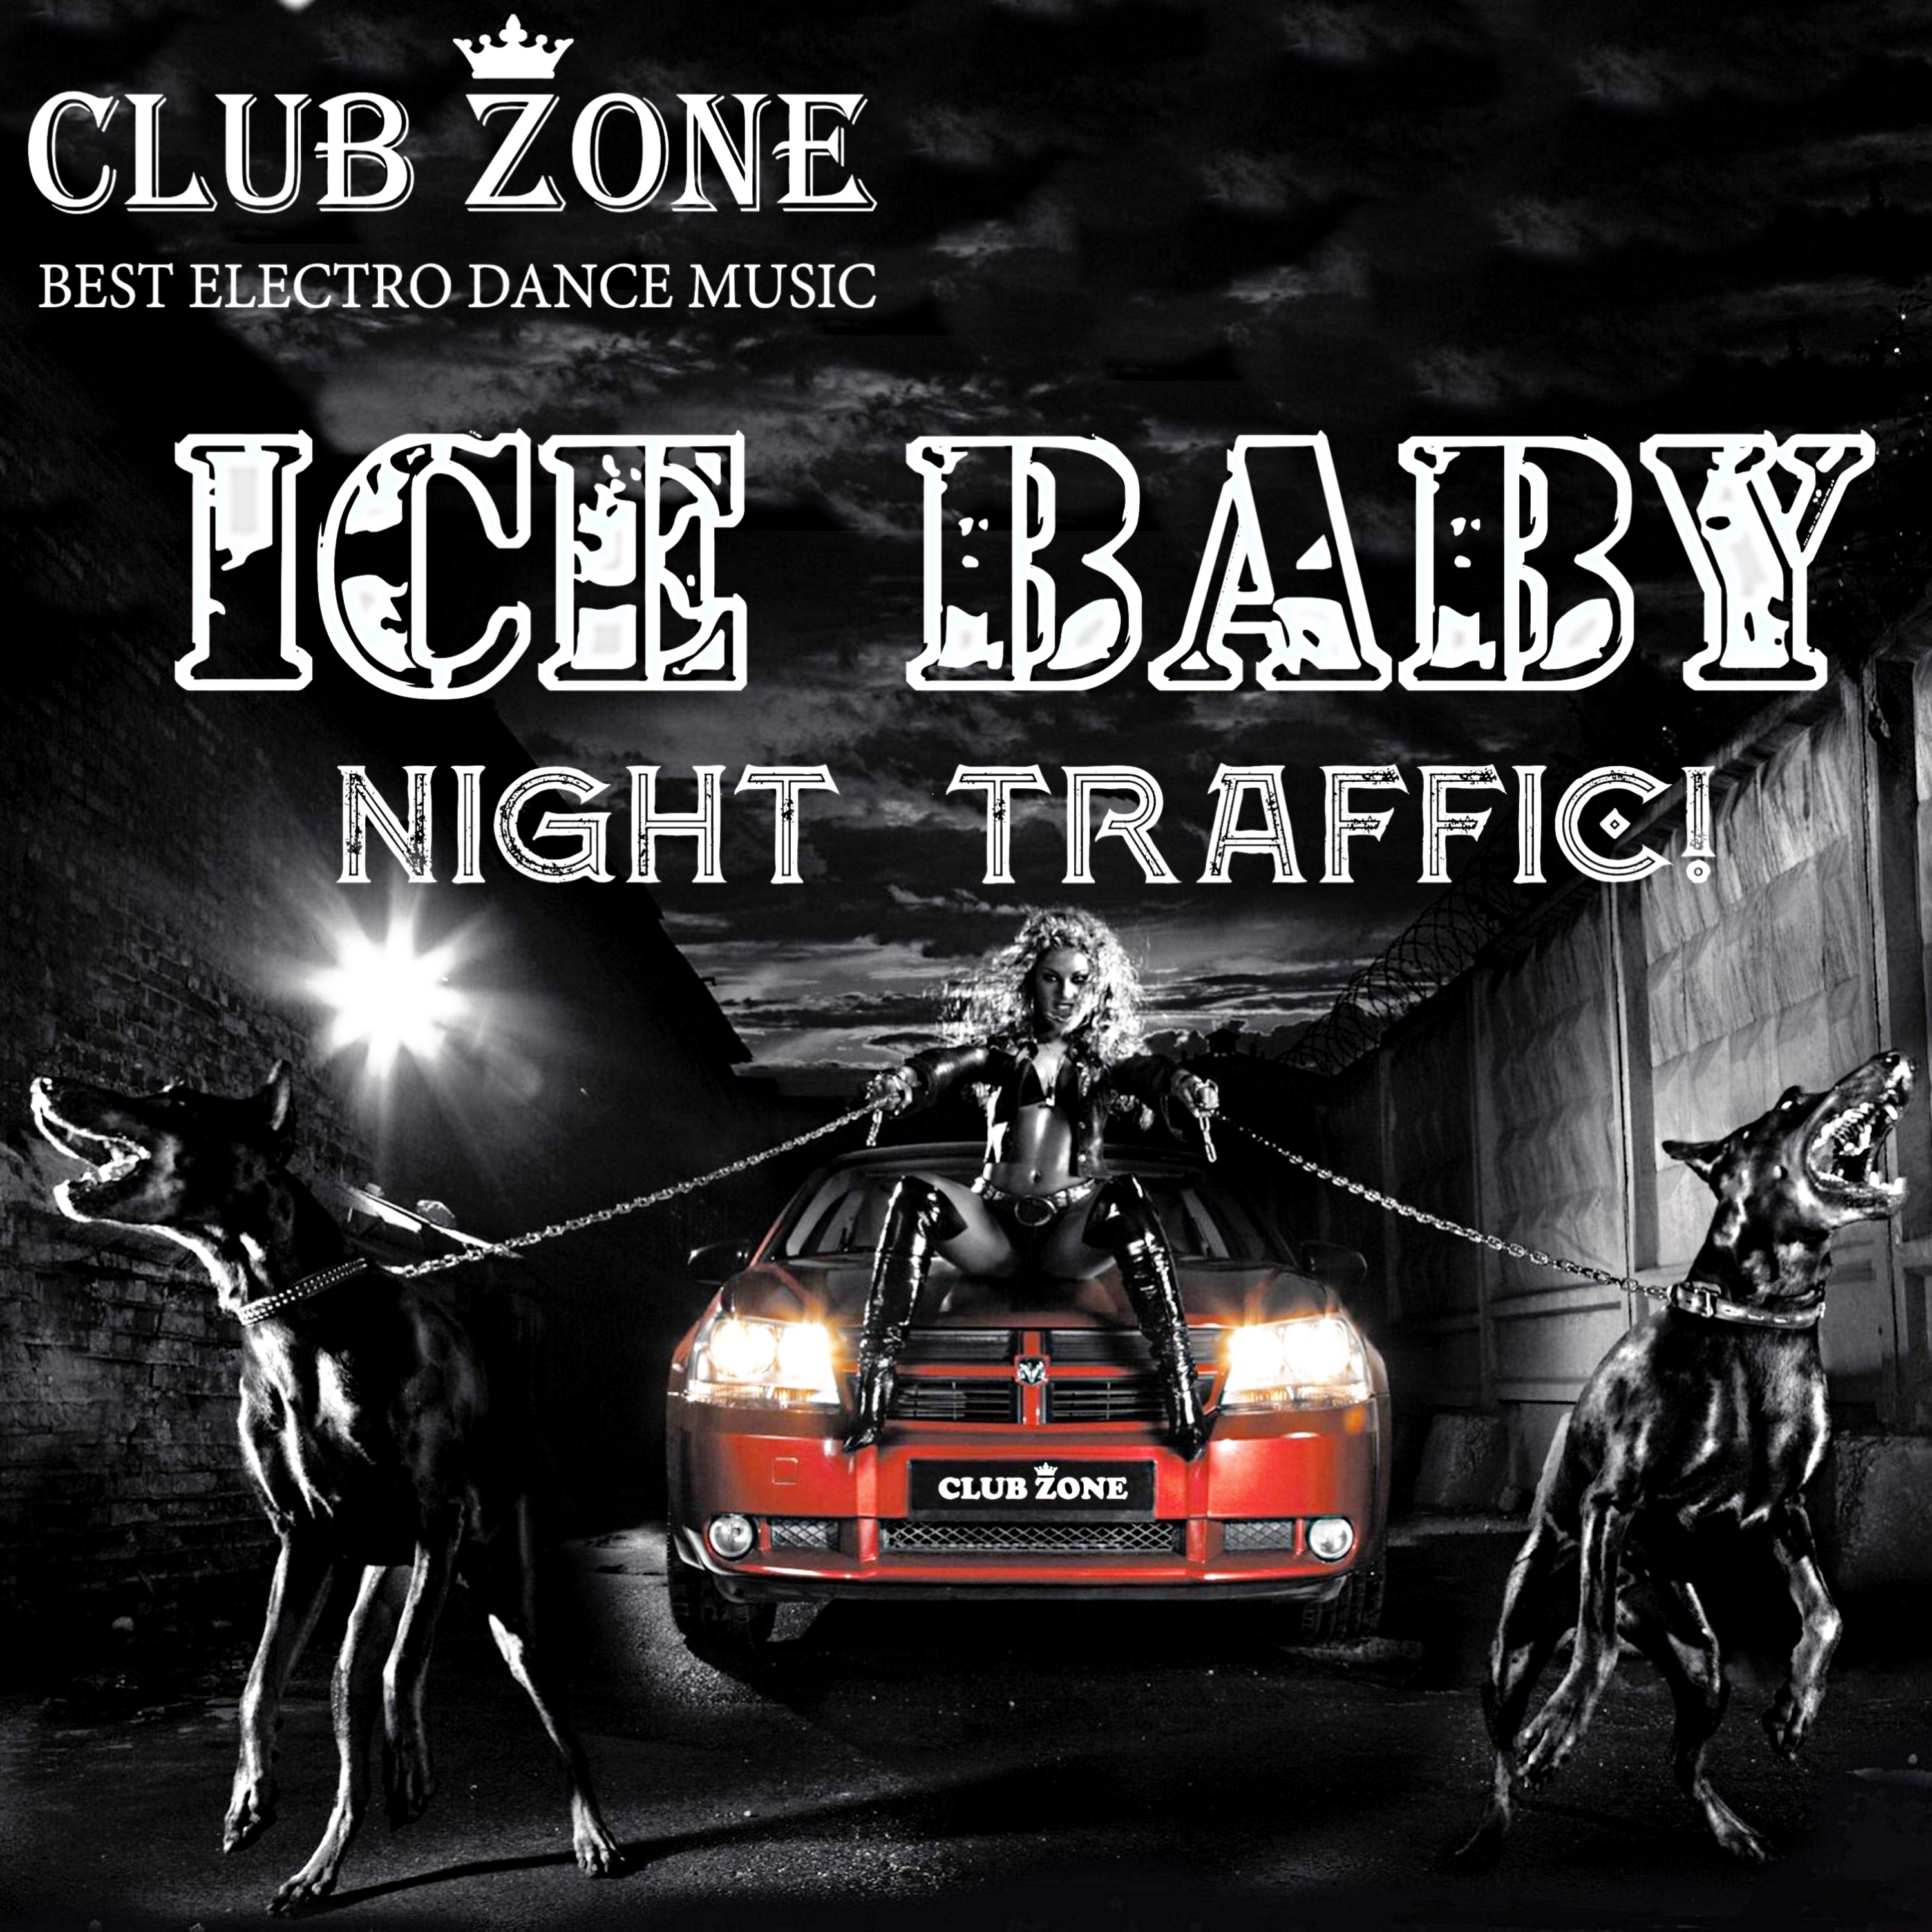 Ice Baby Night Traffic!